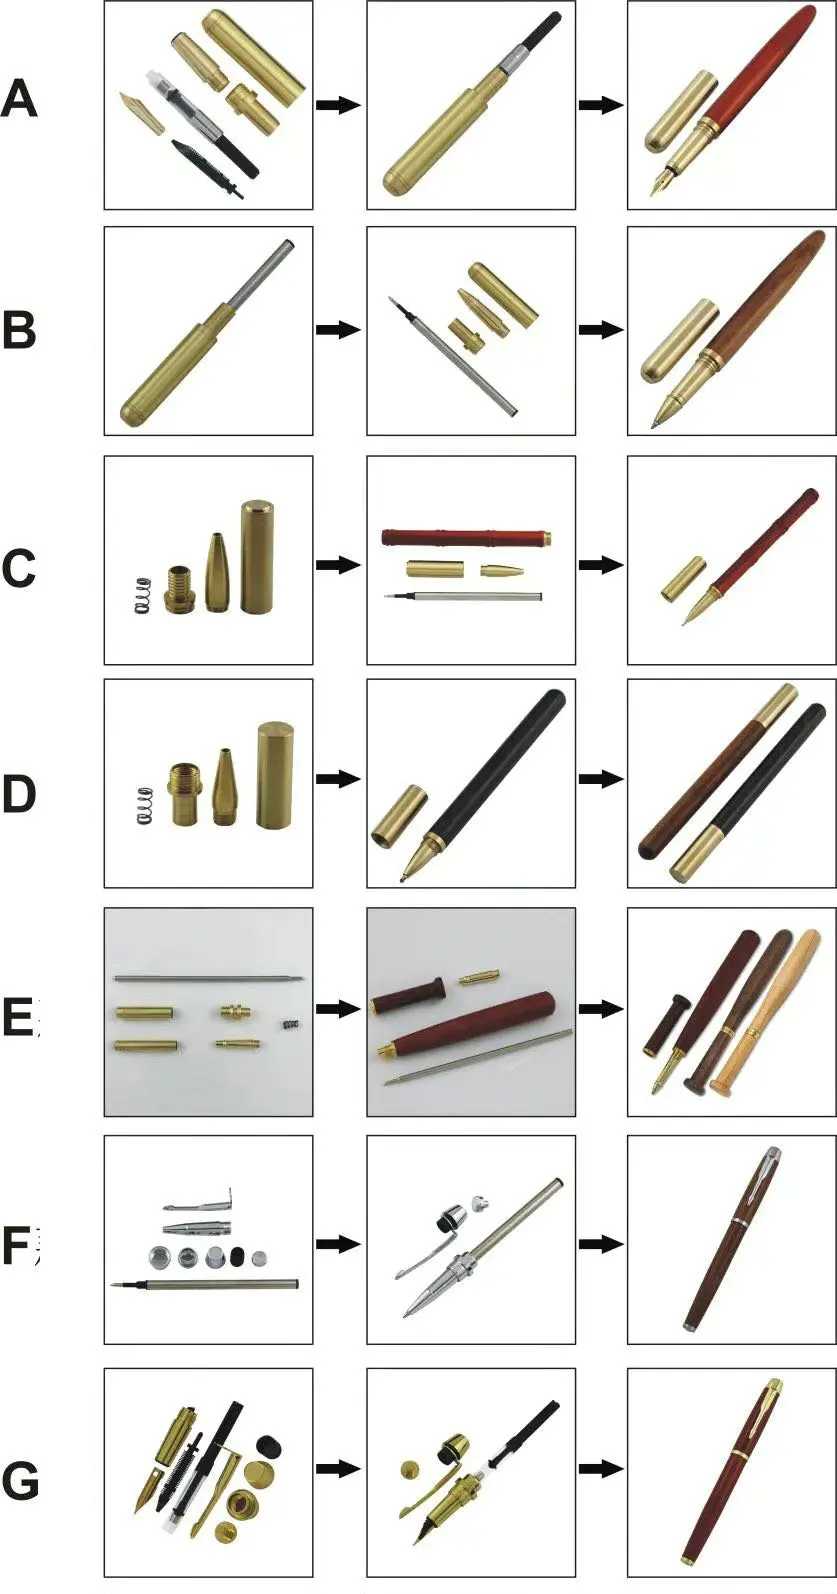 Buy Wholesale China Artisan Americana Woodworking Bushing Pen Kit